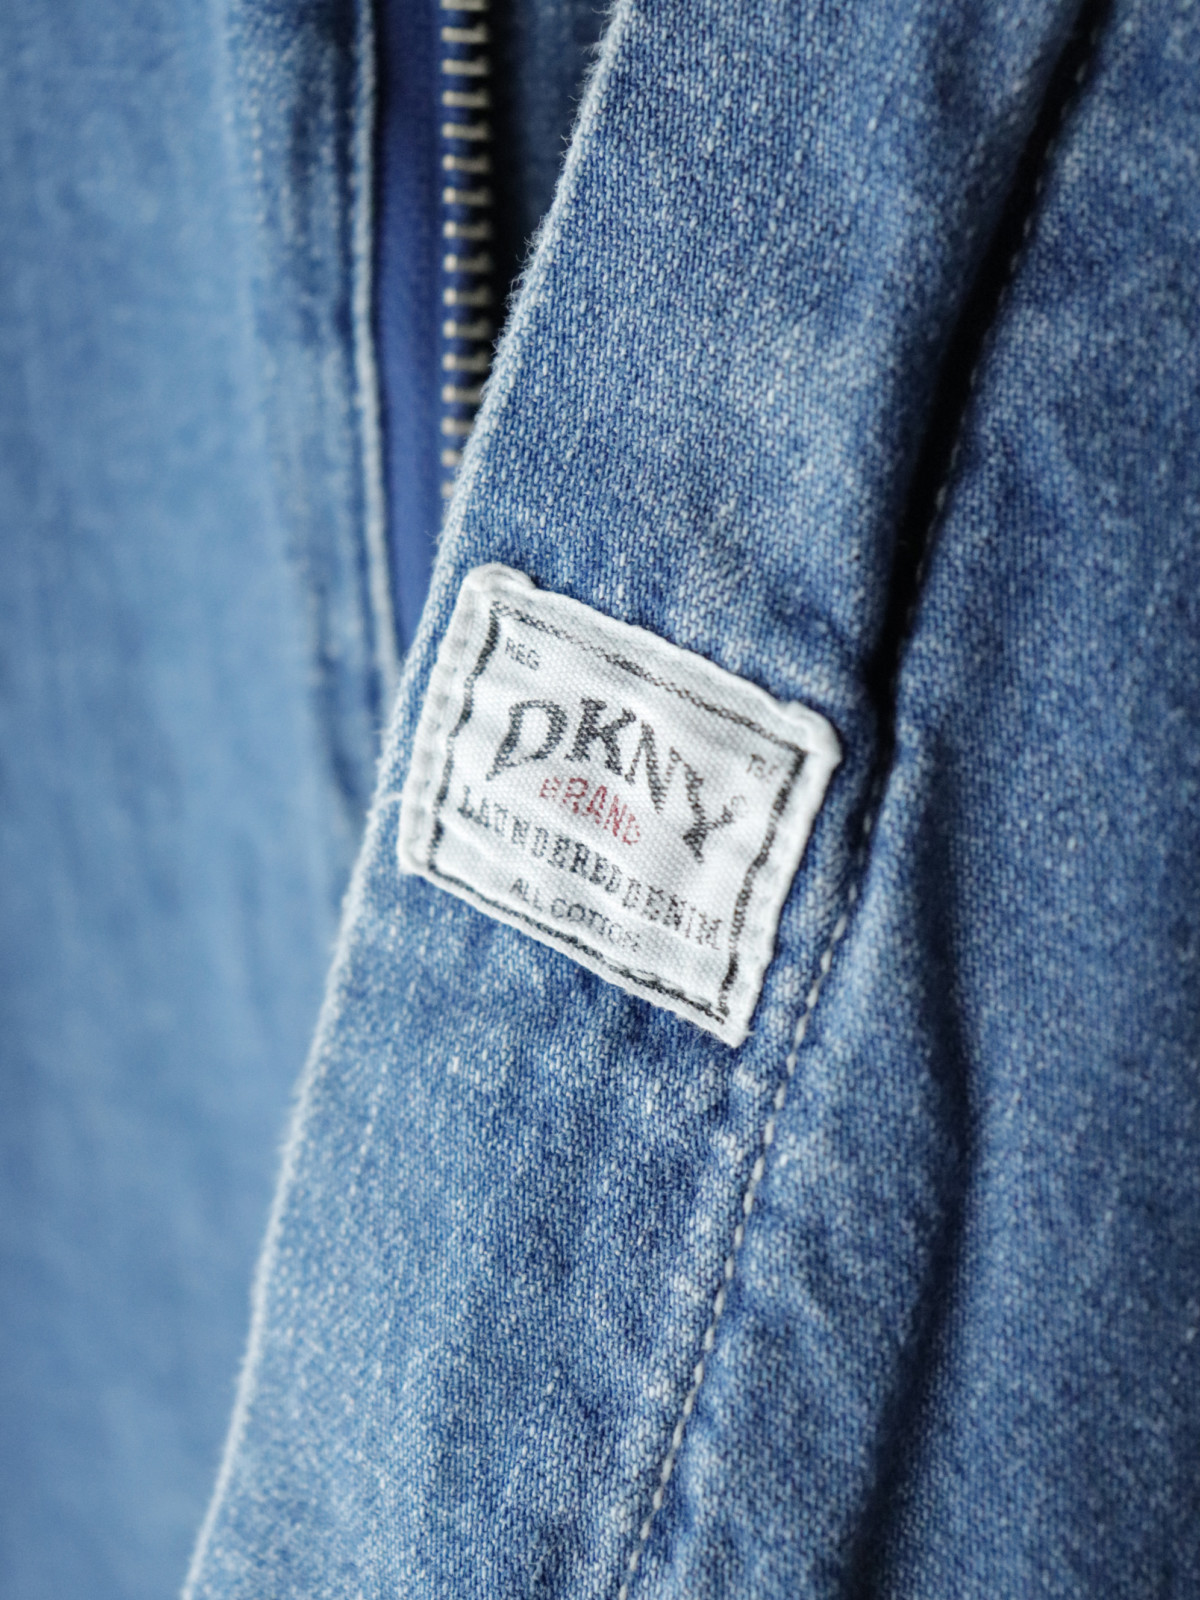 DKNY ,denim jacket, USA